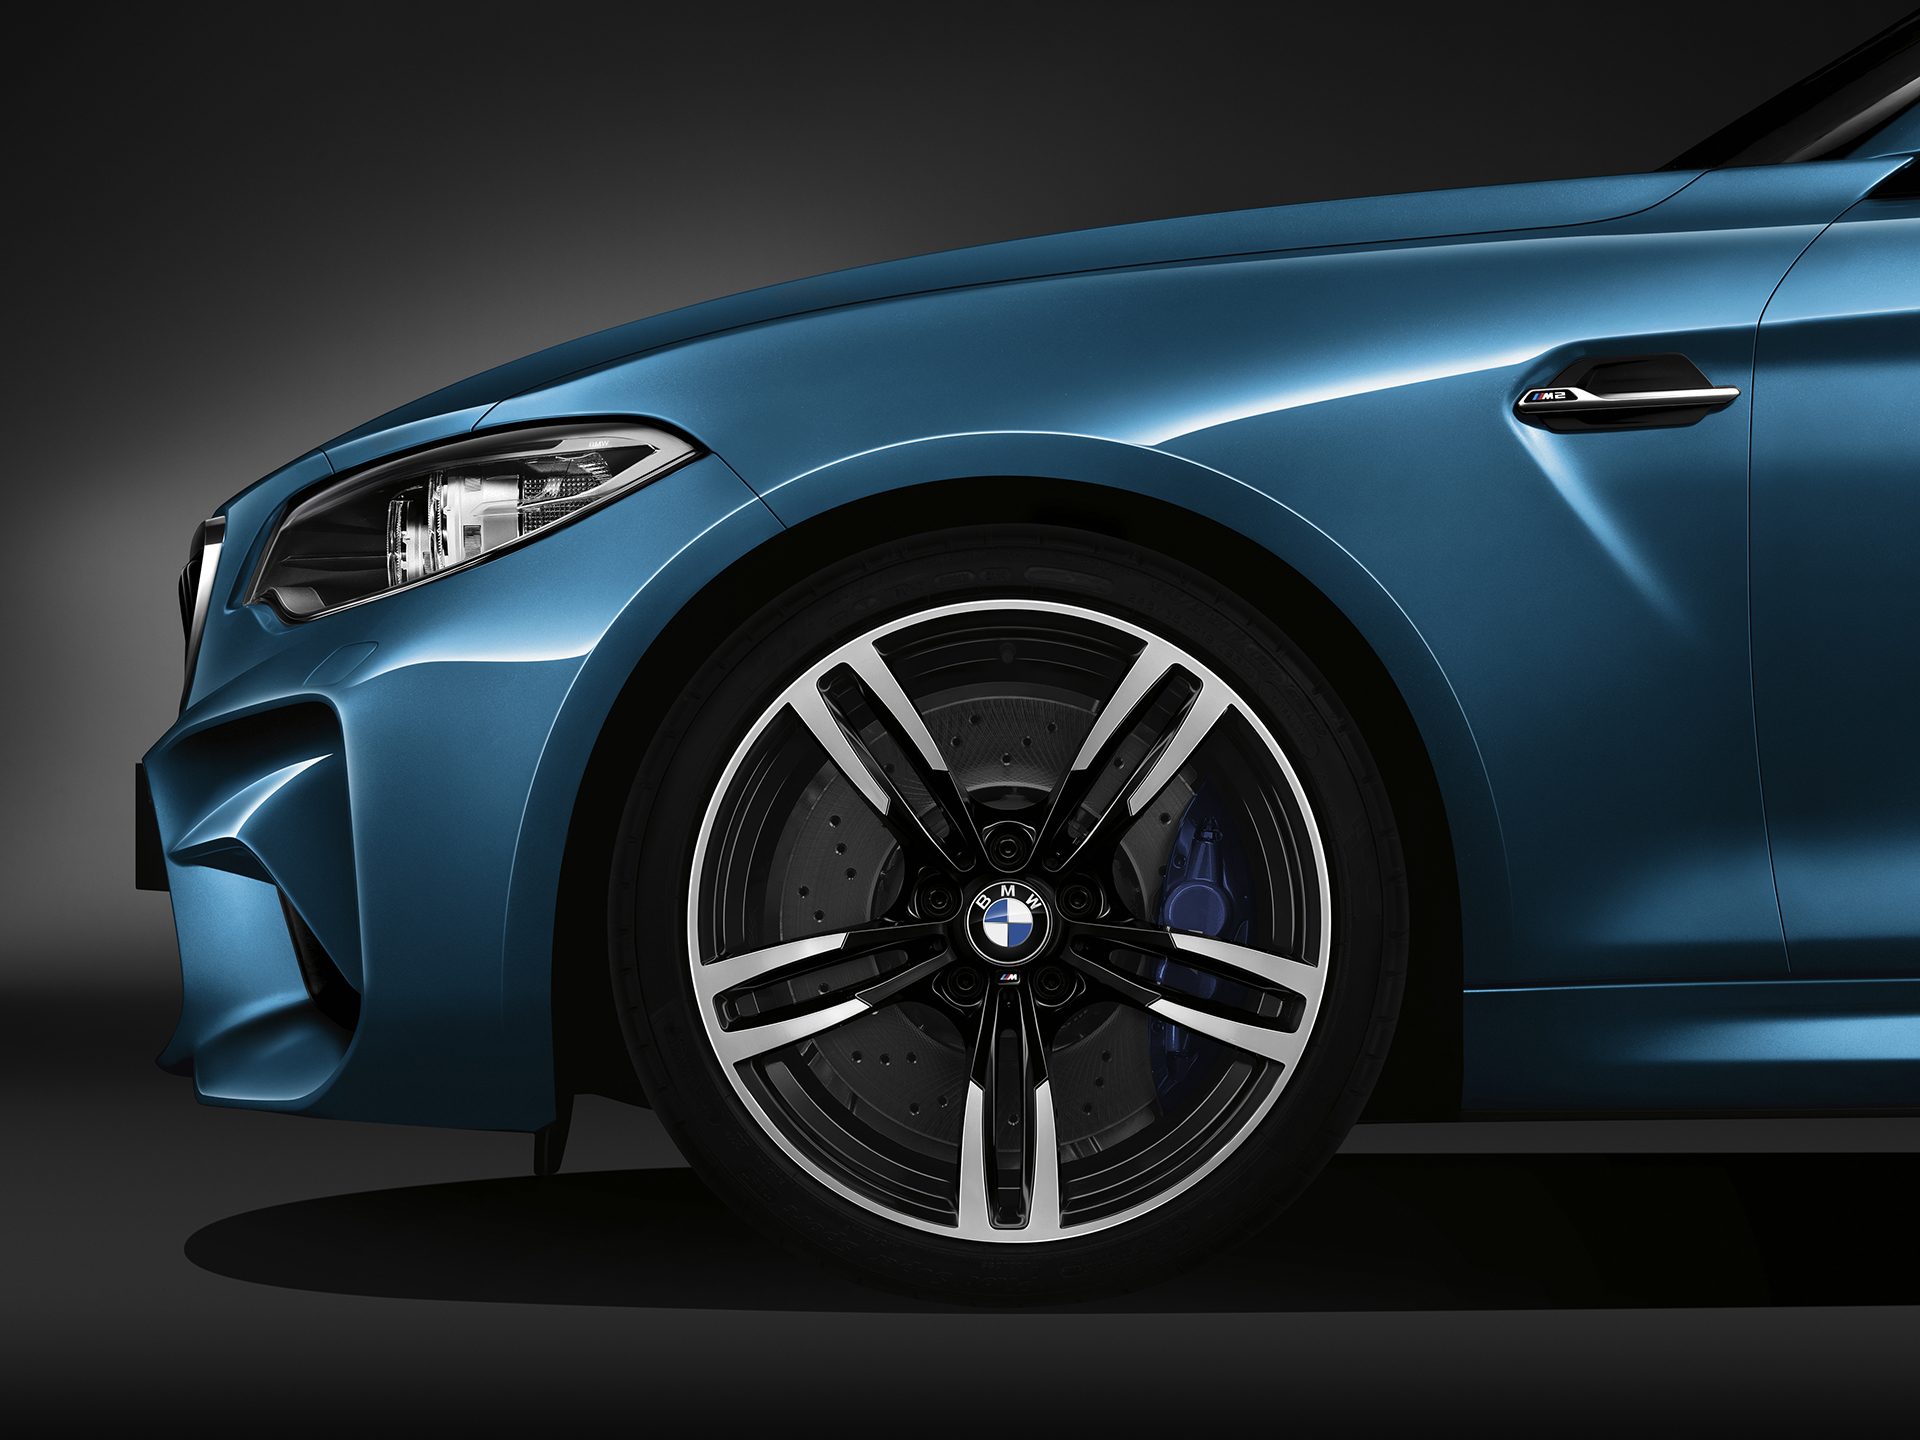 BMW M2 - 2016 - roue avant / front wheel